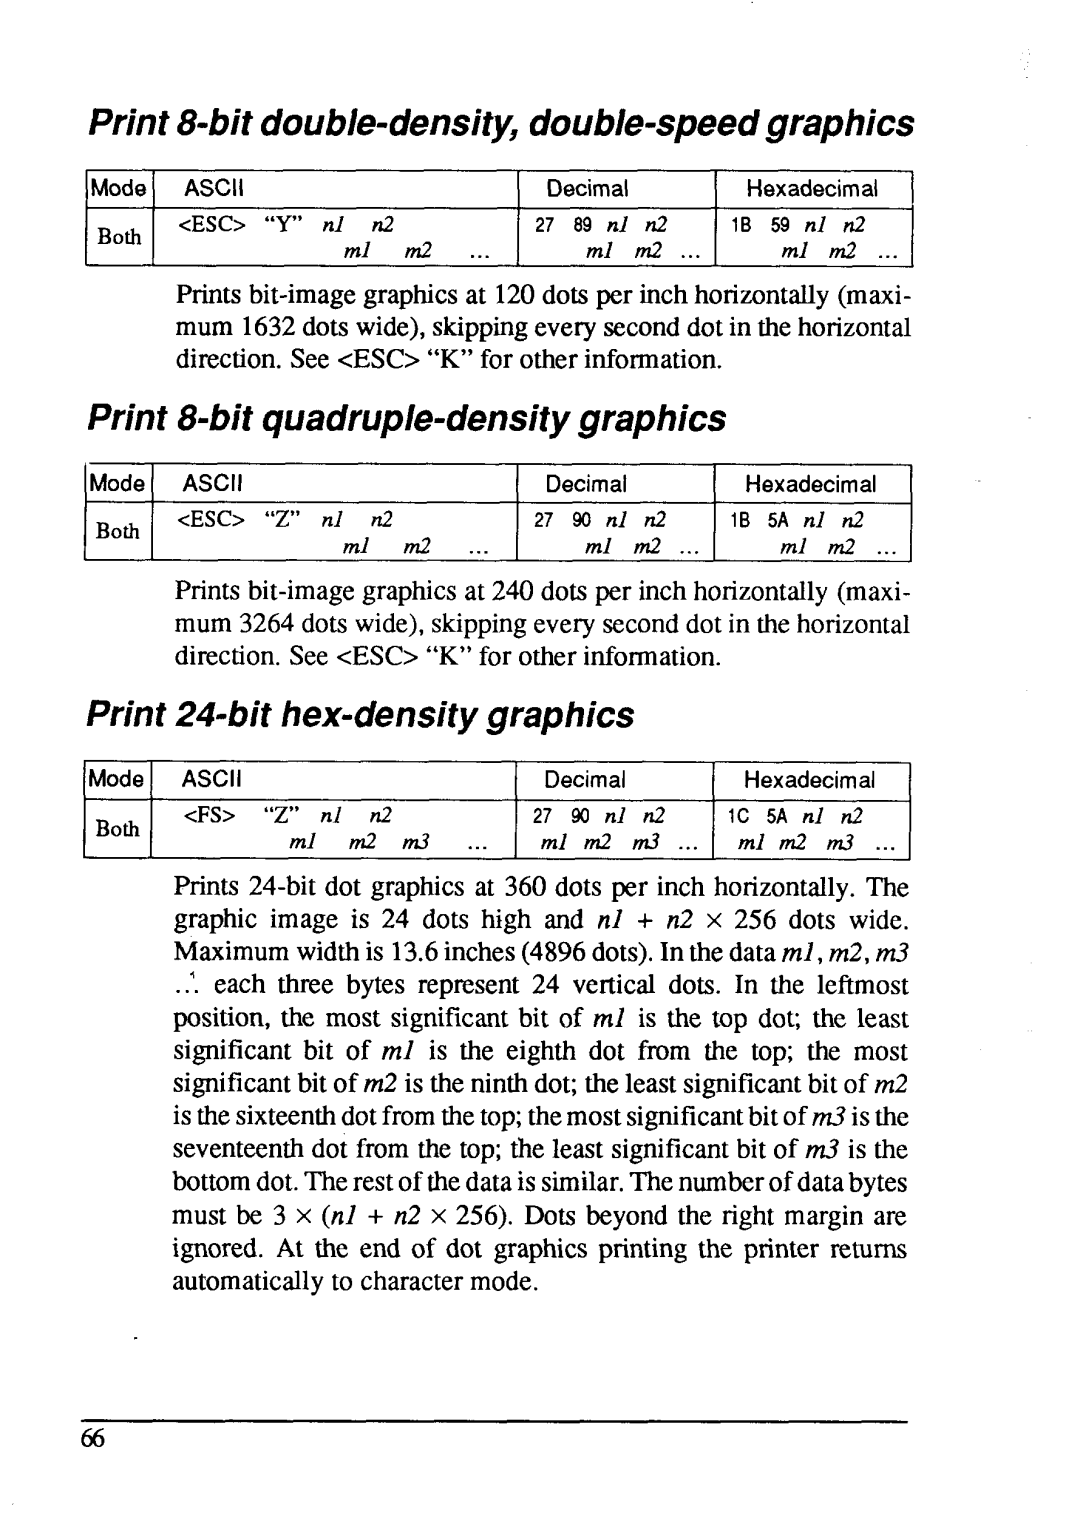 Star Micronics LC24-15 Print 8-bit double-density, double-speed graphics, Print 8-bit quadruple-density graphics 